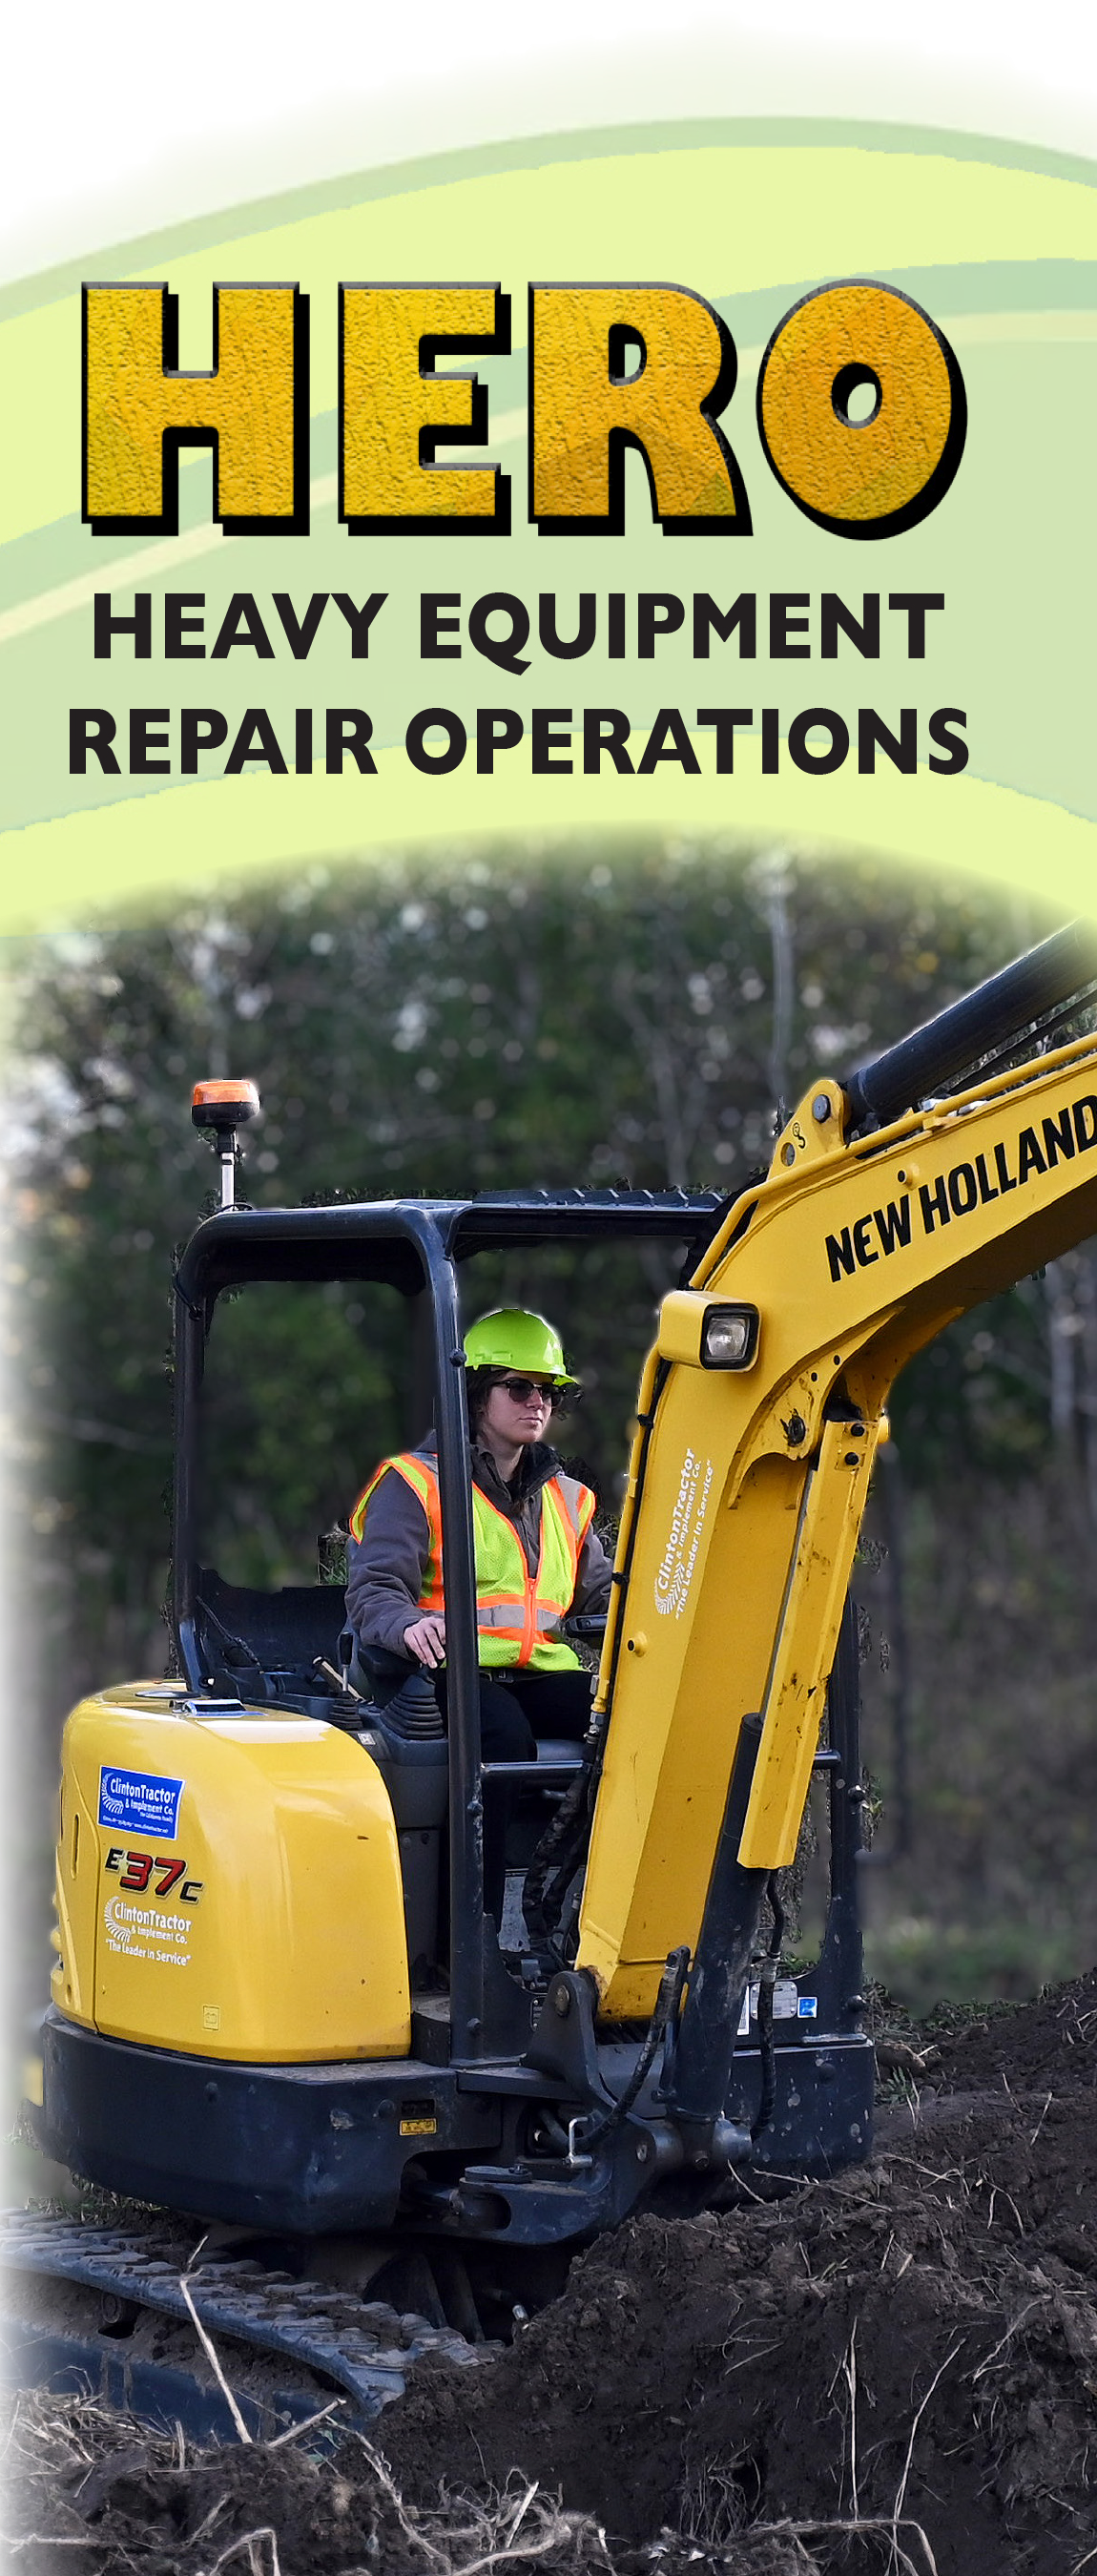 Heavy Equipment Repair Operations program brochure cover